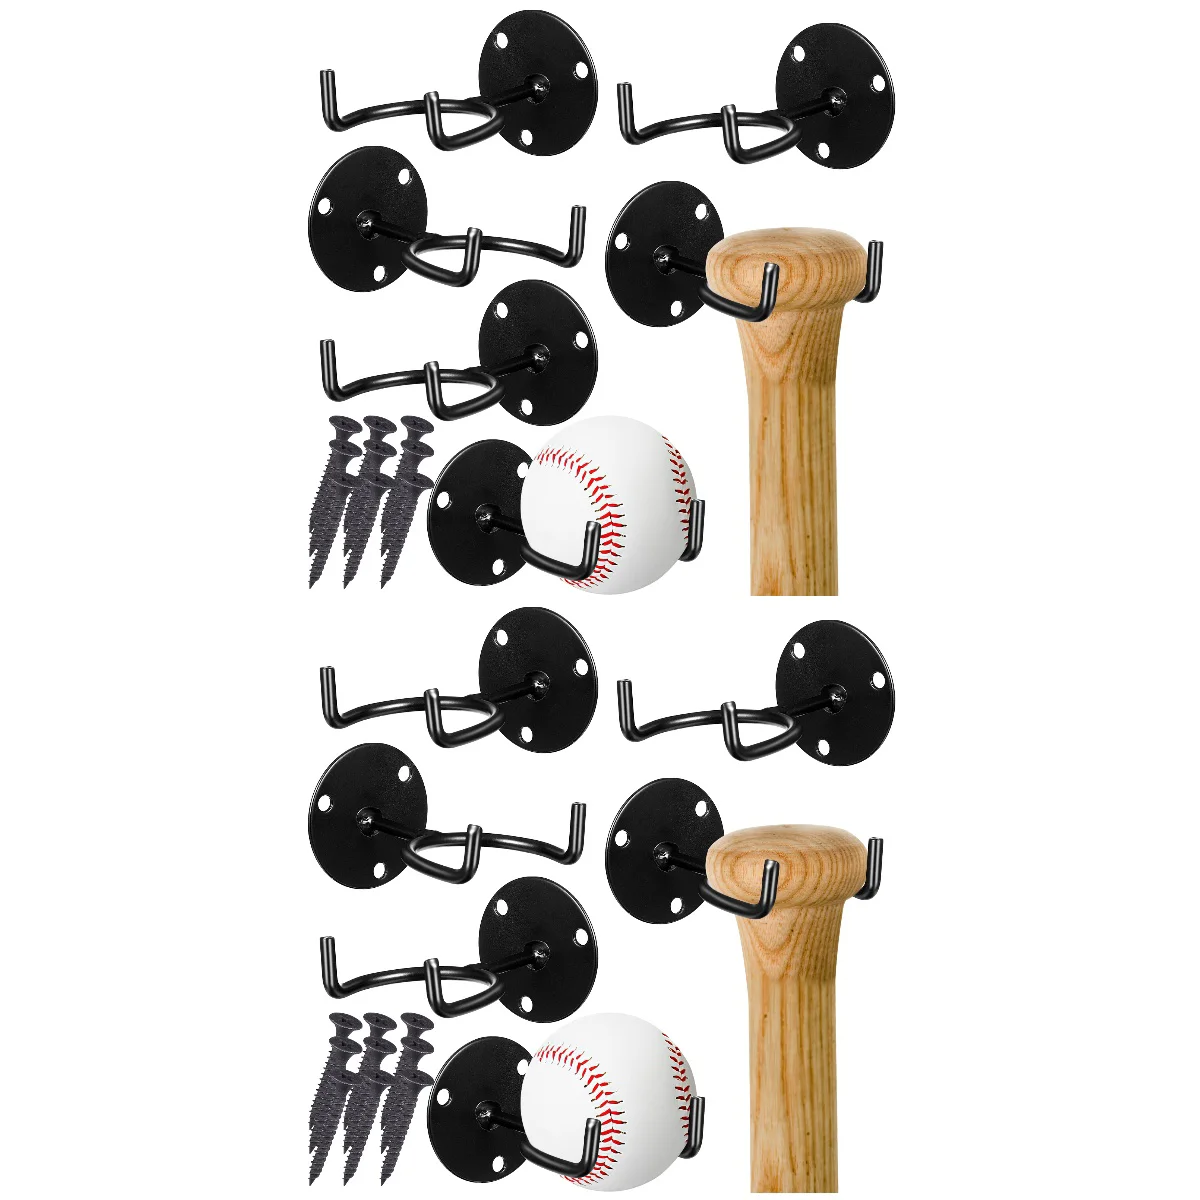 

12 Pcs Iron Display Sturdy Wall Mounted Multipurpose Baseball Bat Brackets Baseball Bat Hangers Baseball Bat Racks